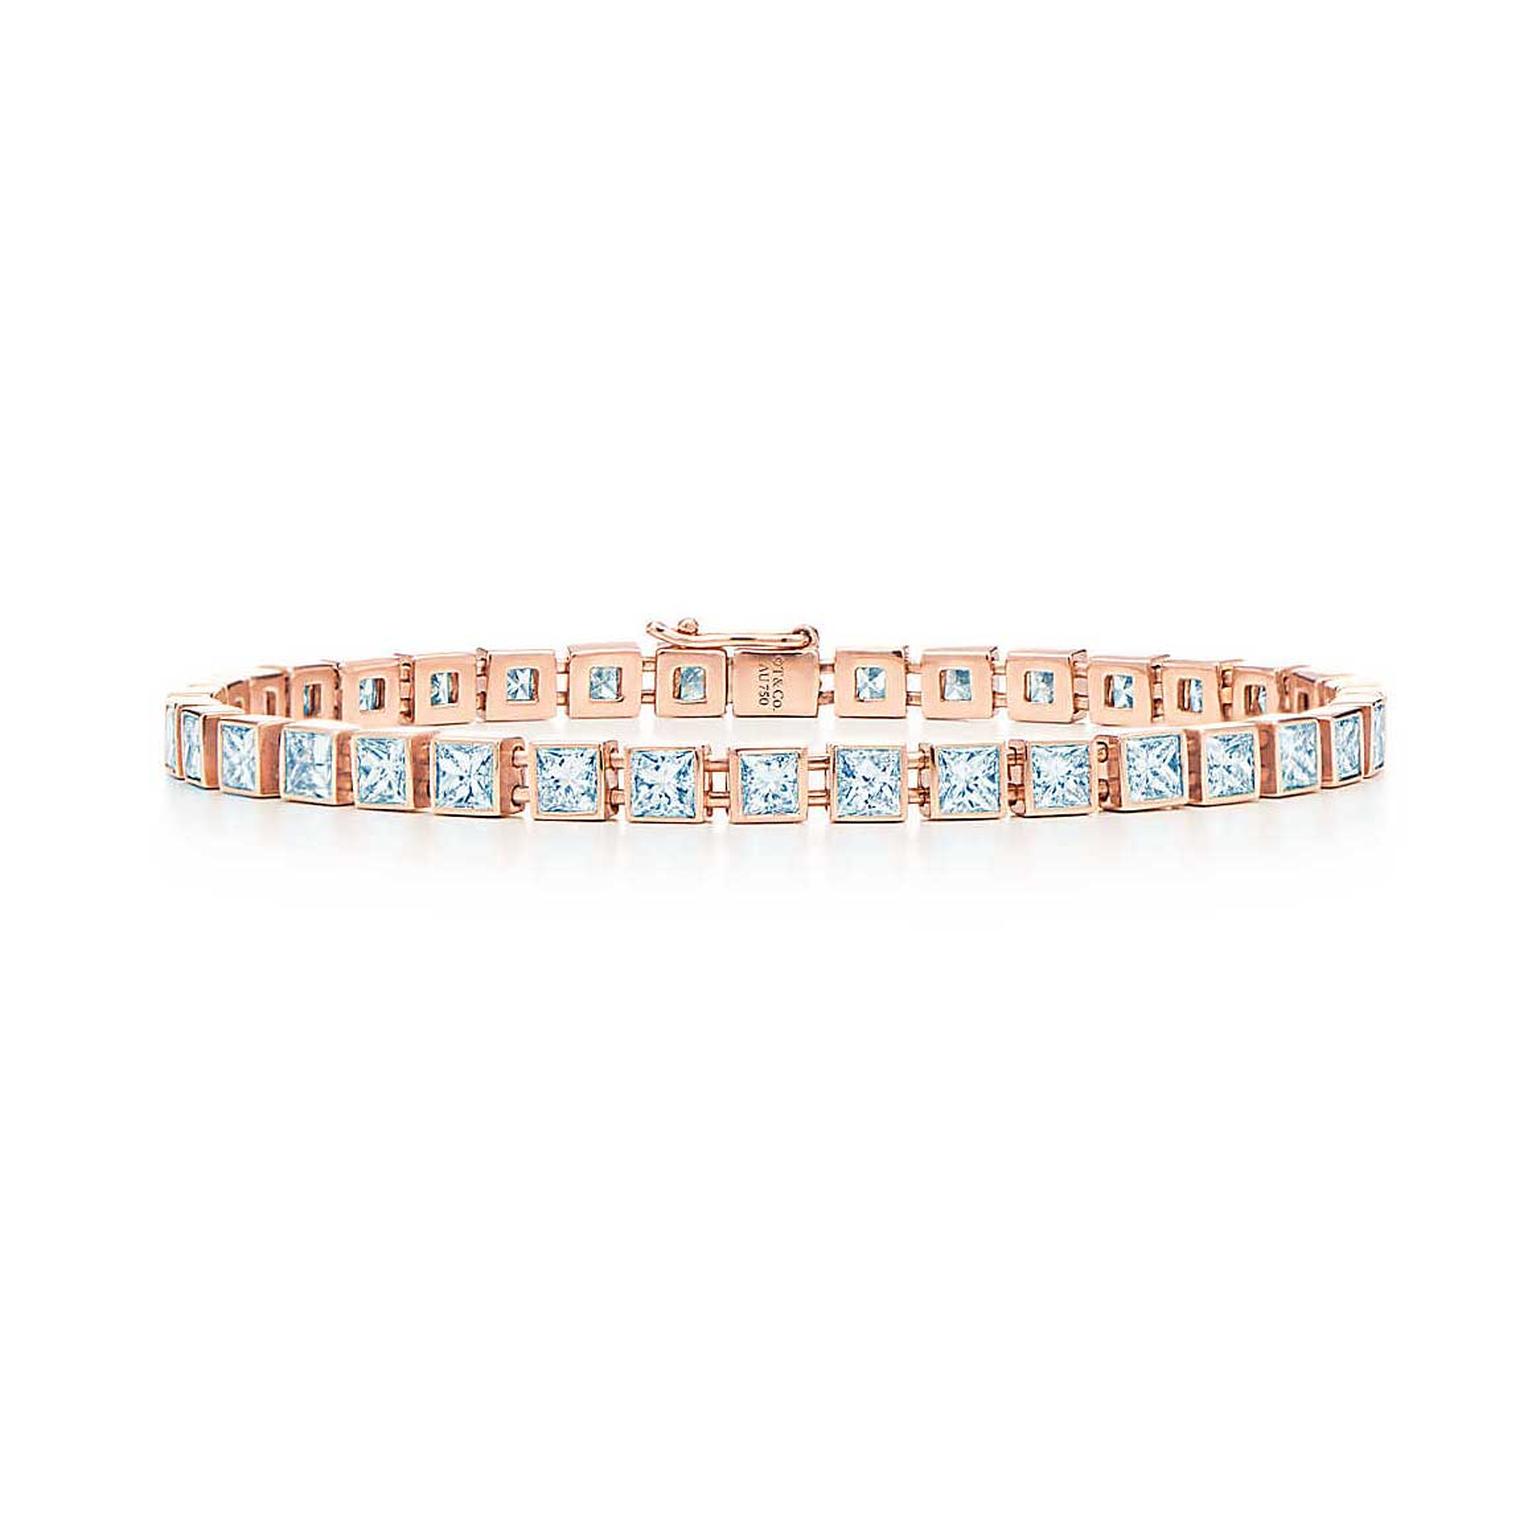 Tiffany diamond tennis bracelet in rose gold